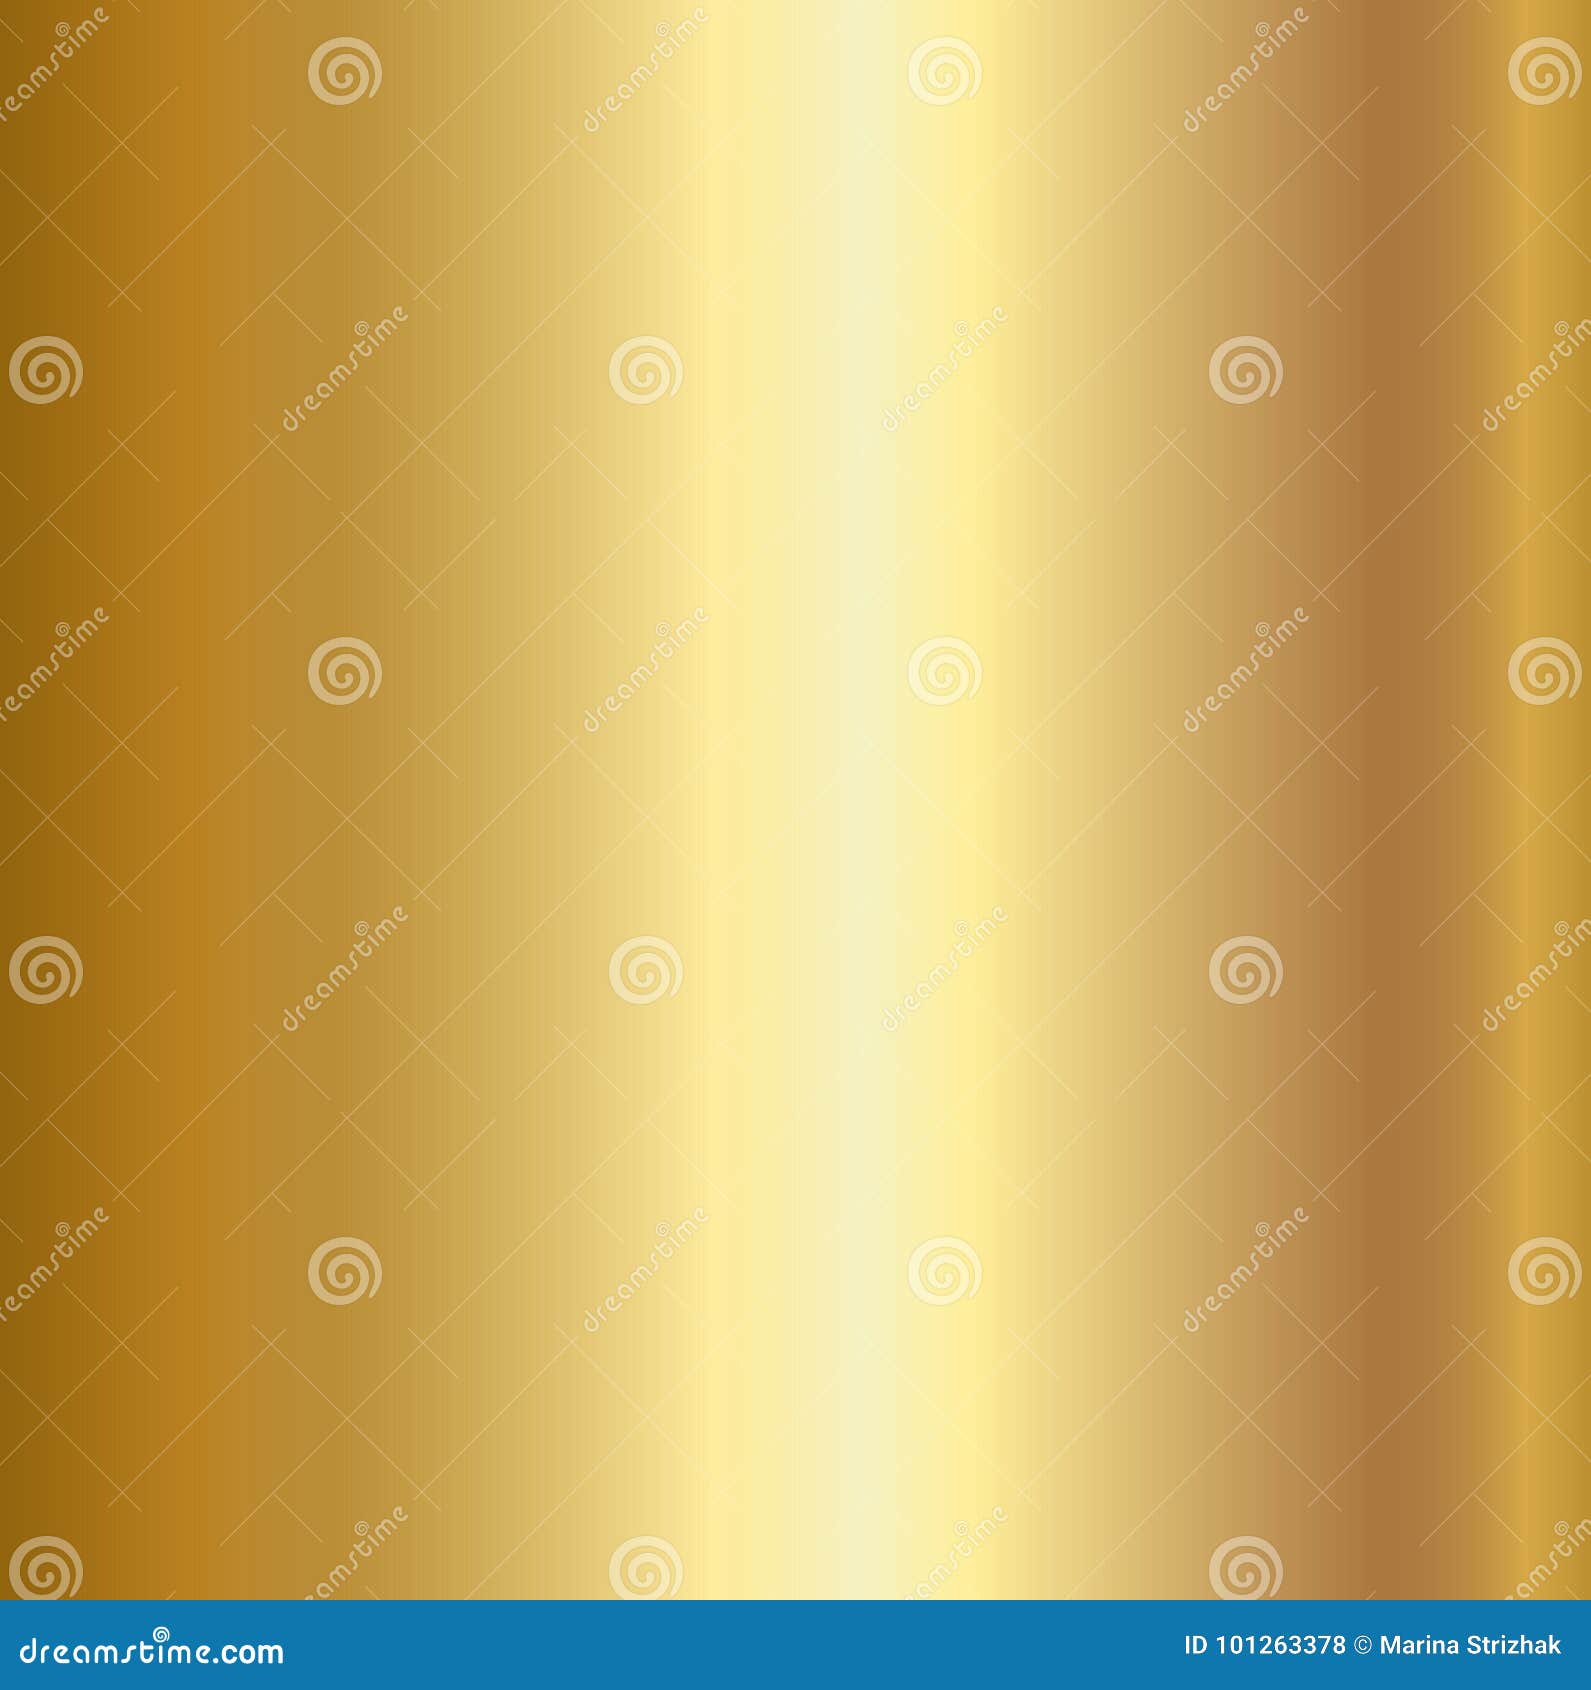 gold foil texture background. realistic golden  metal gradient template